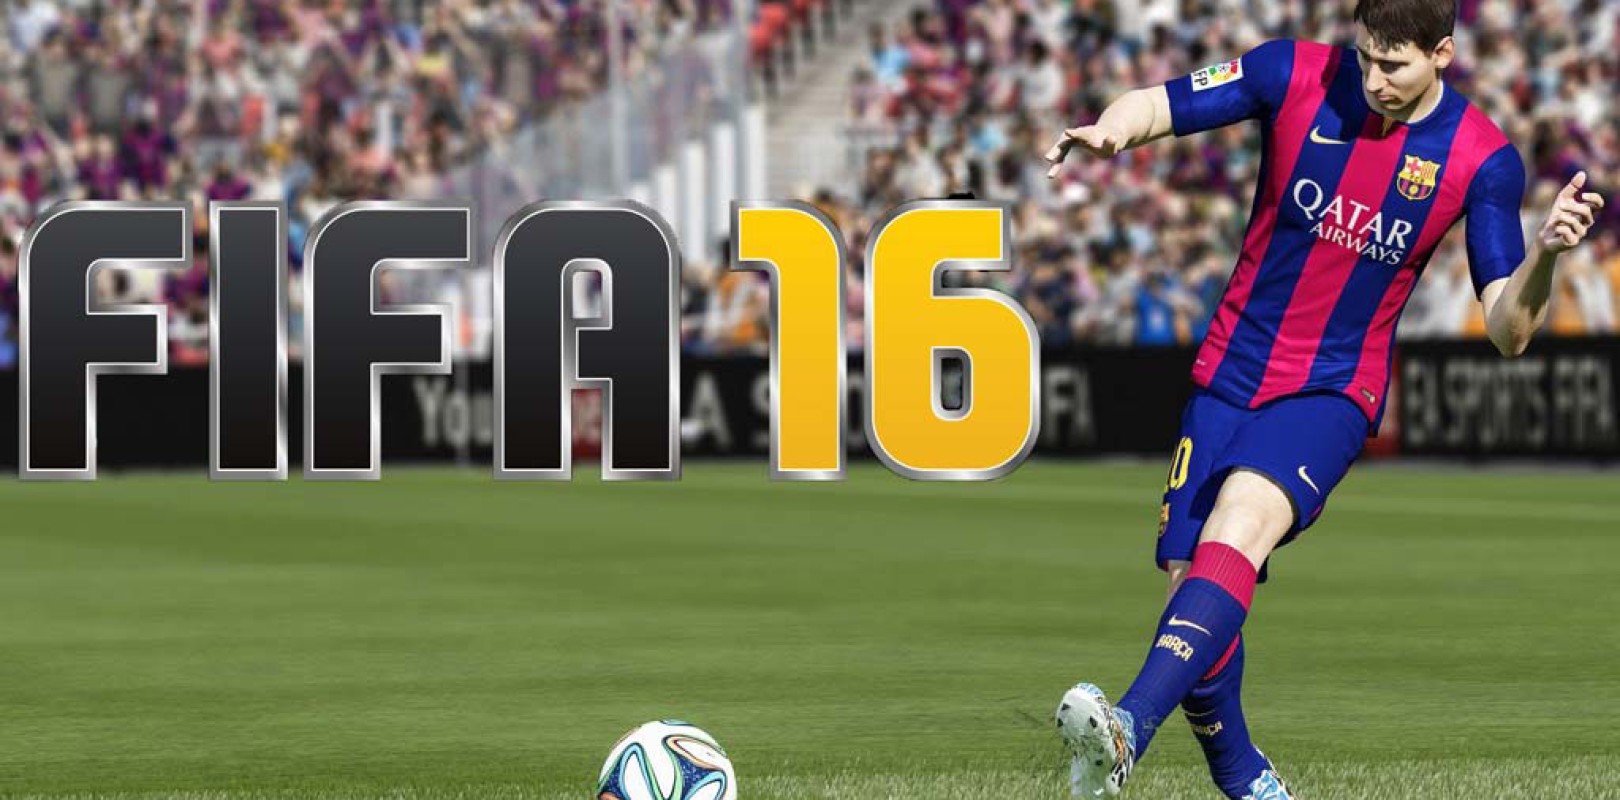 FIFA 16 esta presente en la E3 2019